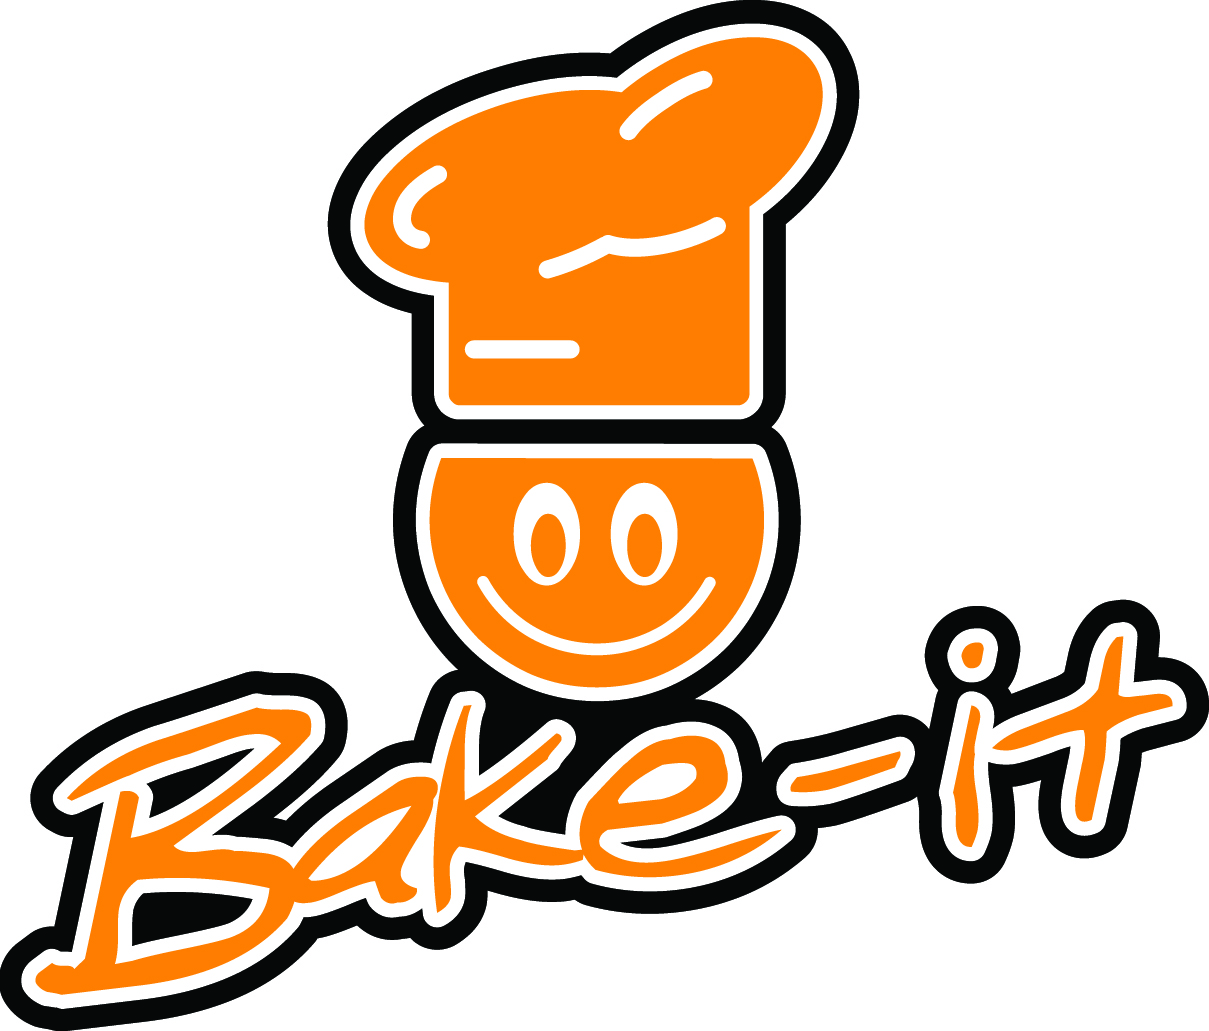 Bake-itLogofinal-72cc9e